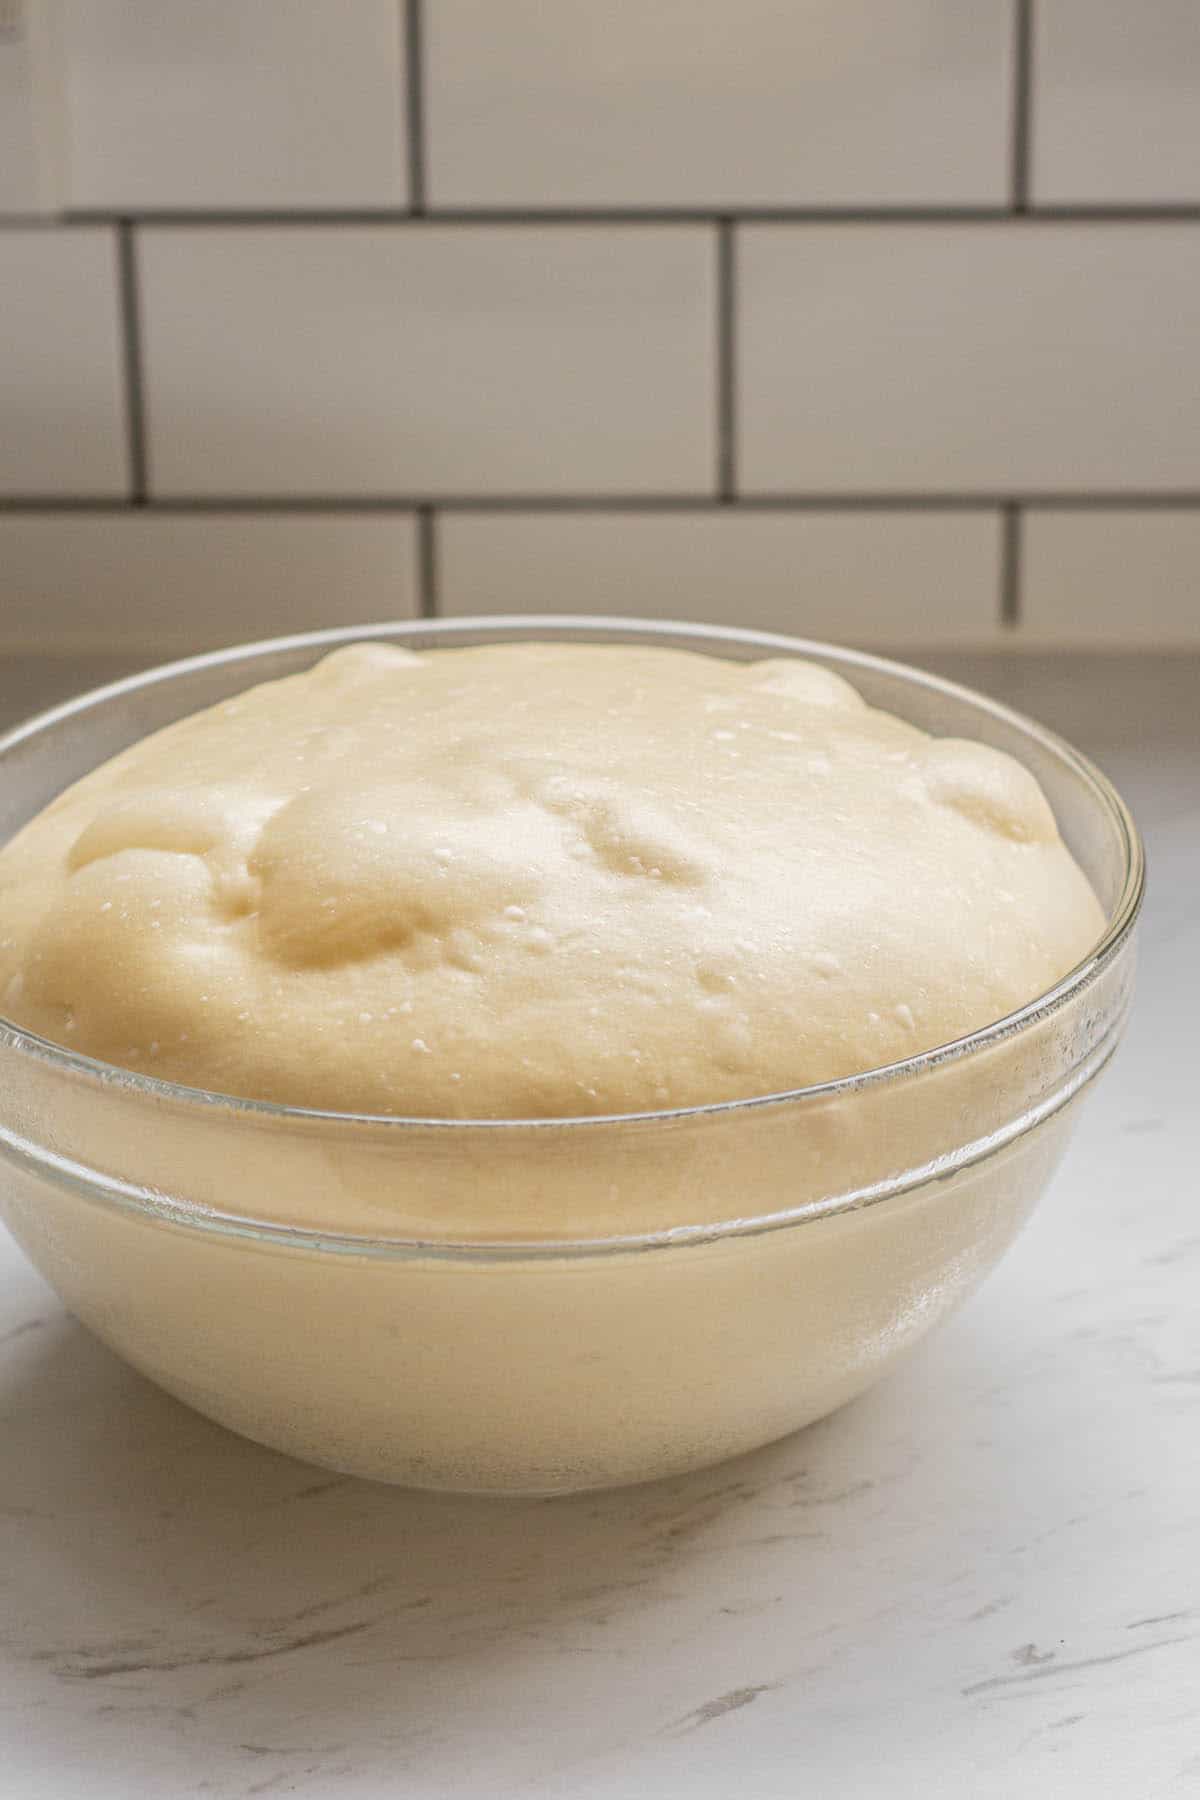 risen dough in a glass bowl.